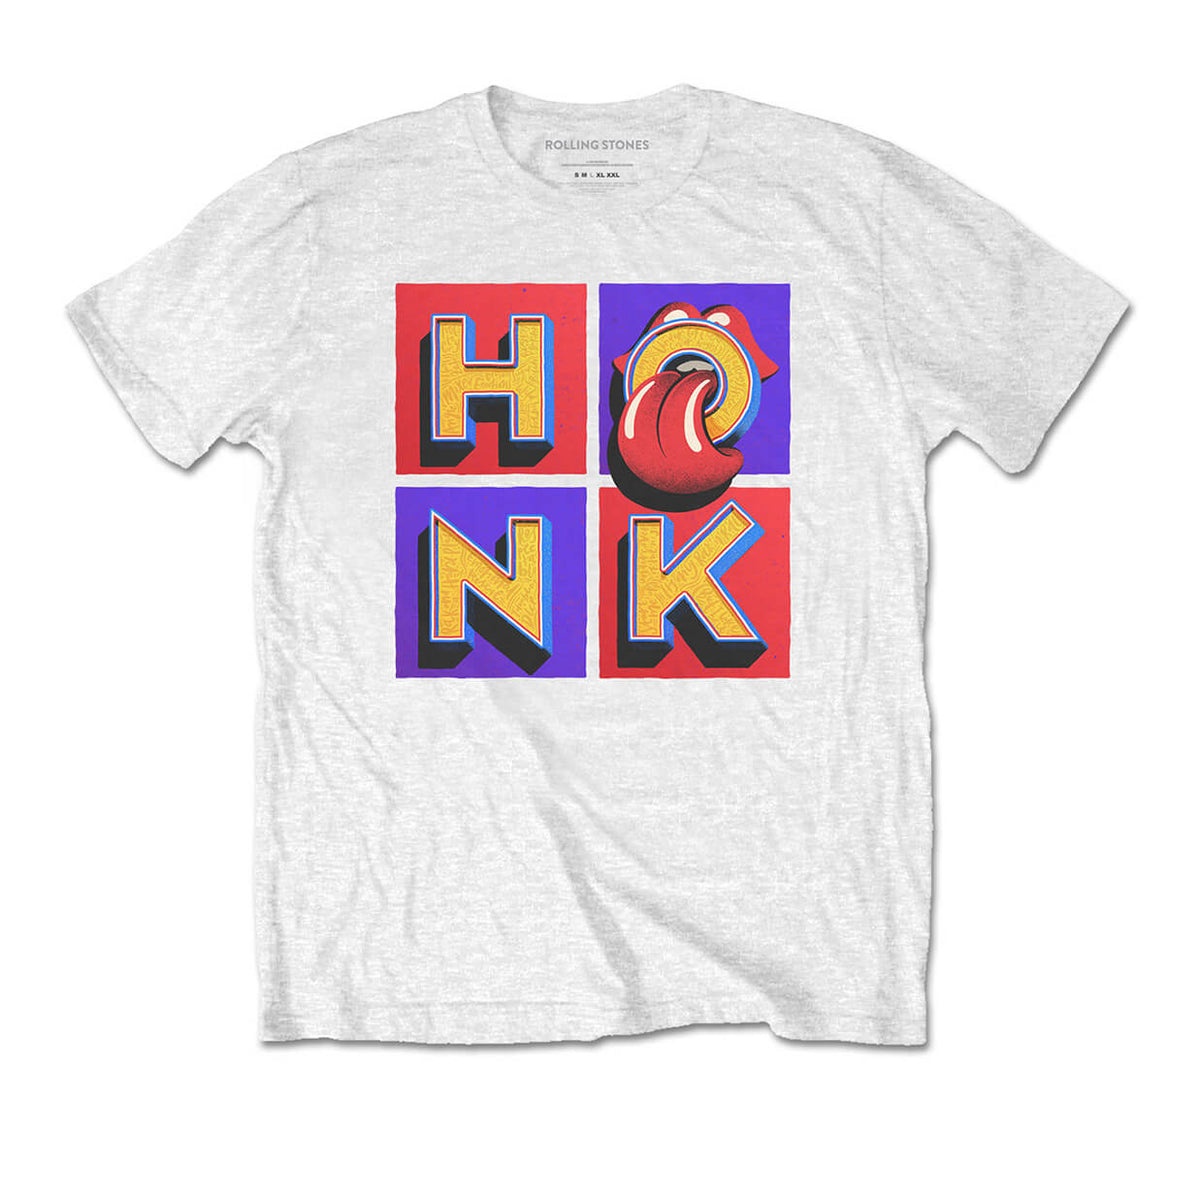 Vinyl - The Rolling Stones : Honk - T-Shirt - The Record Hub